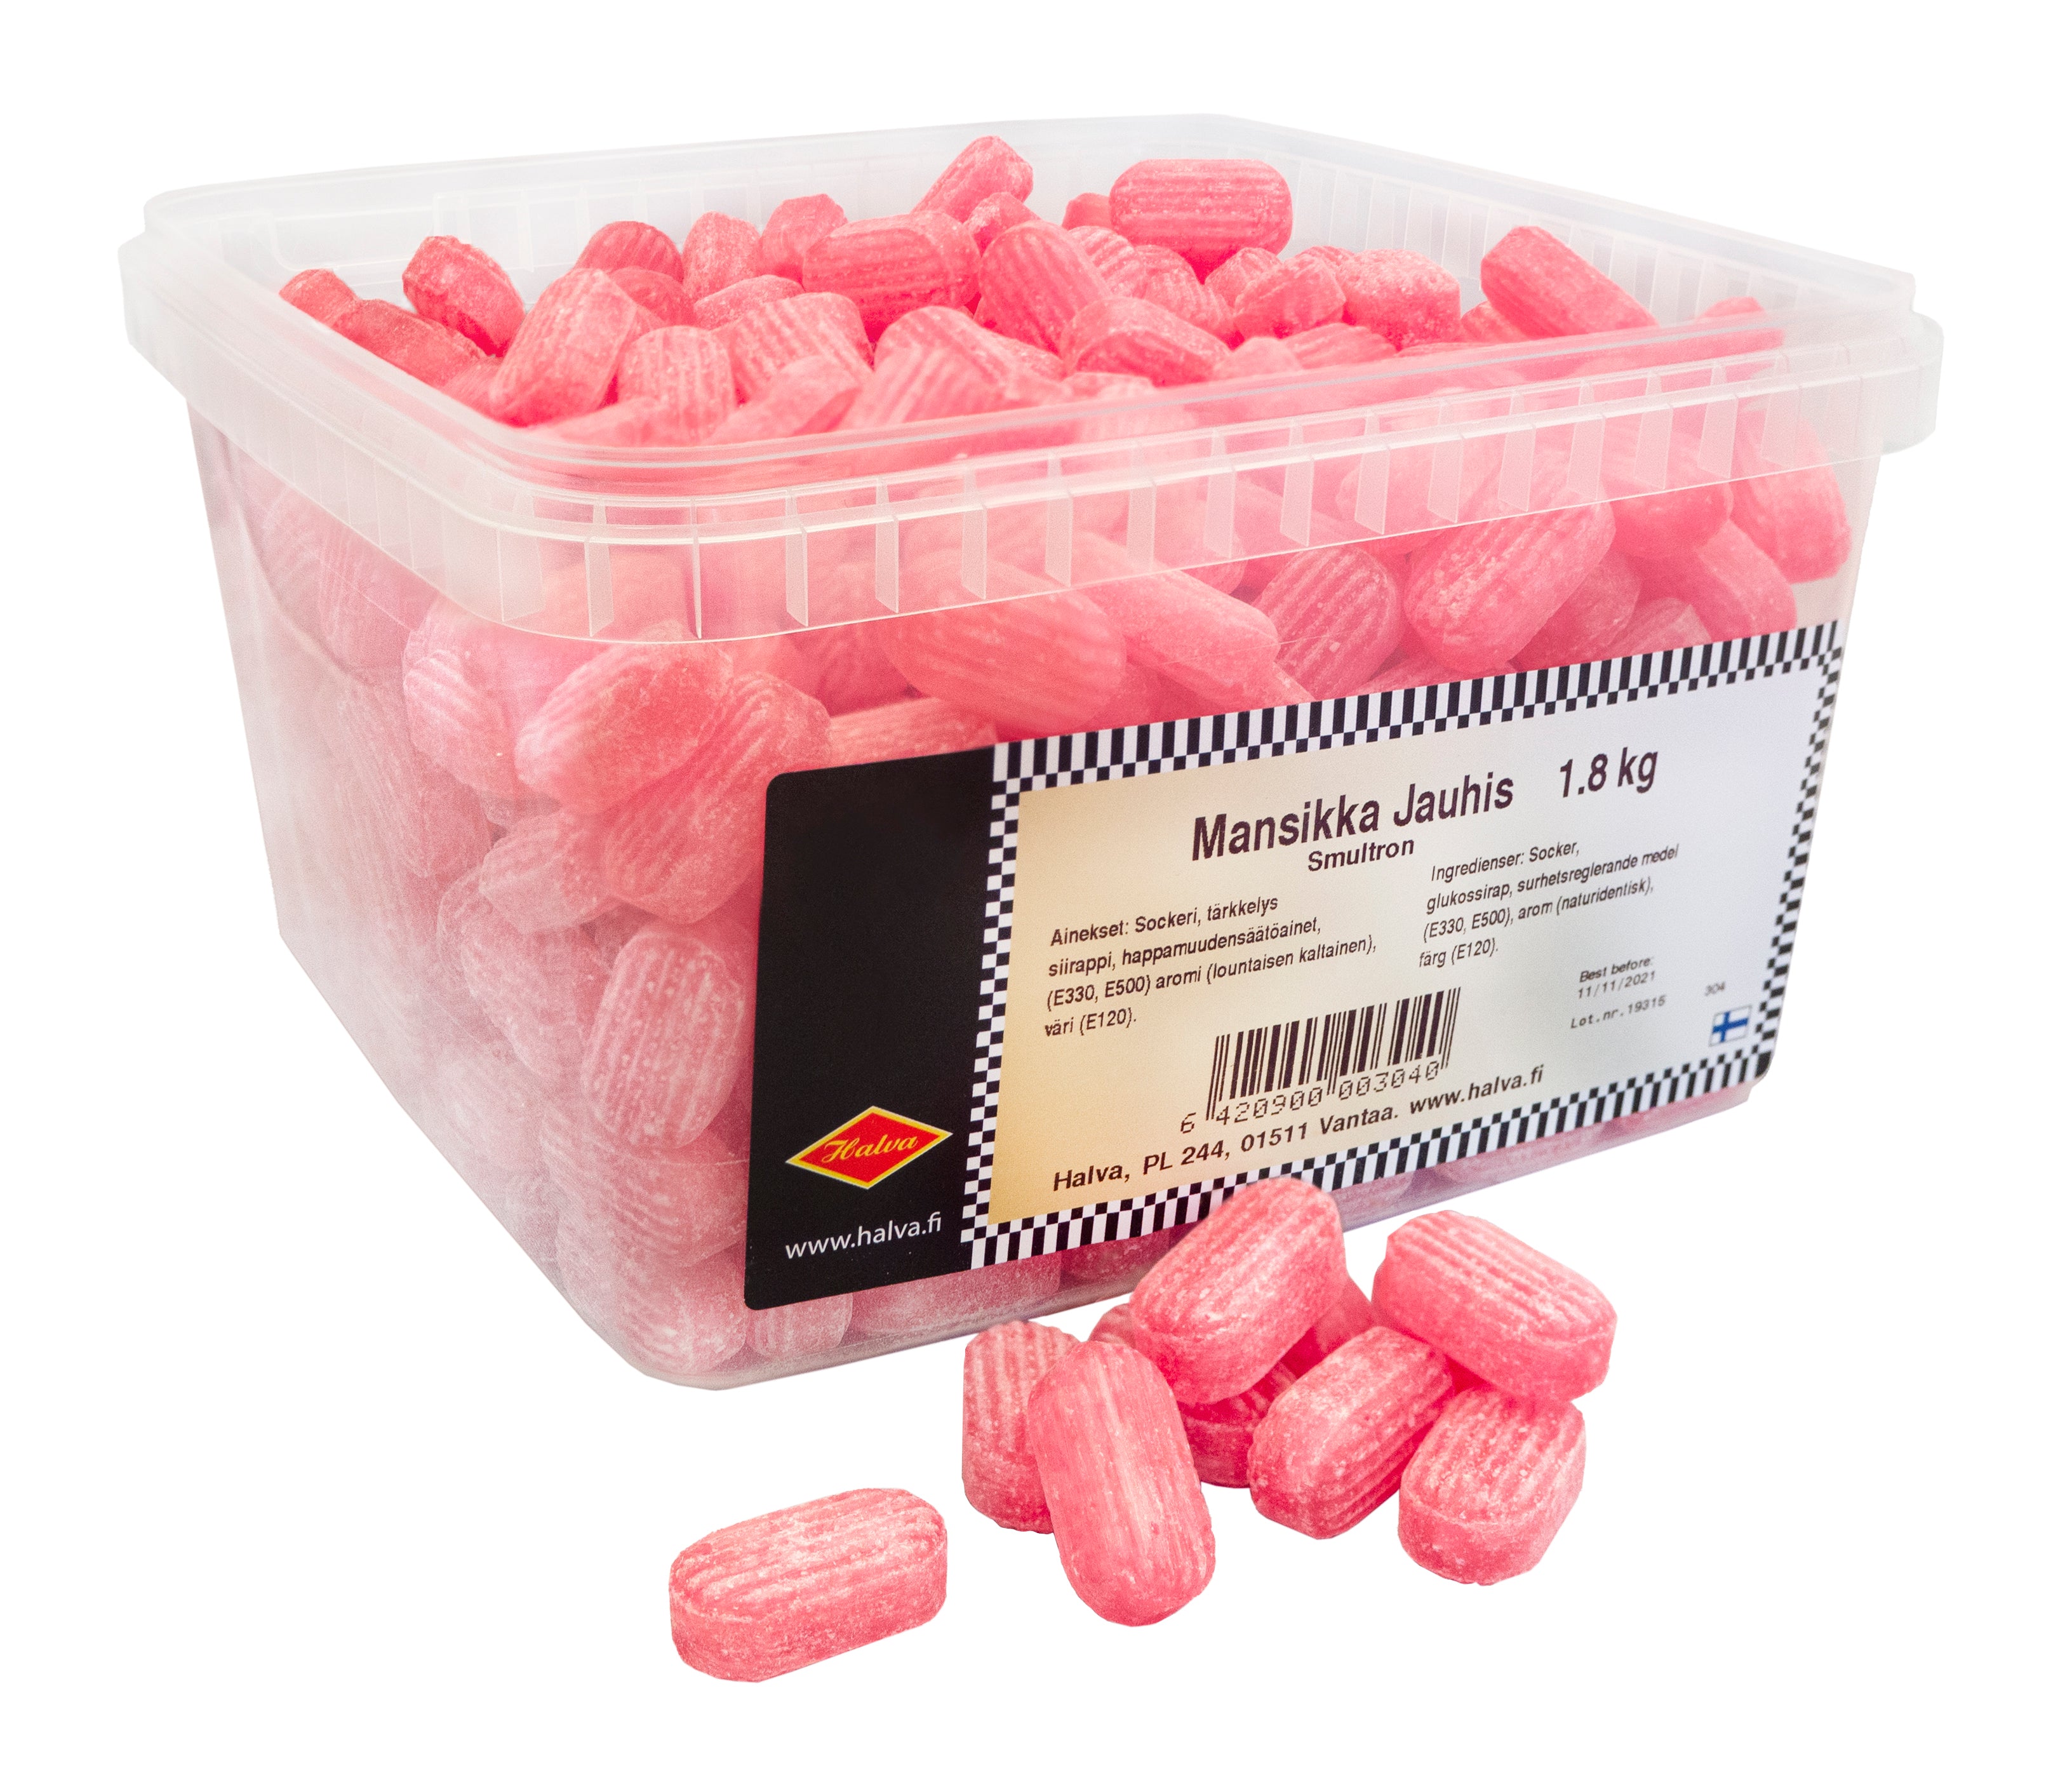 Halva Hard strawberry candy 1.8 kg